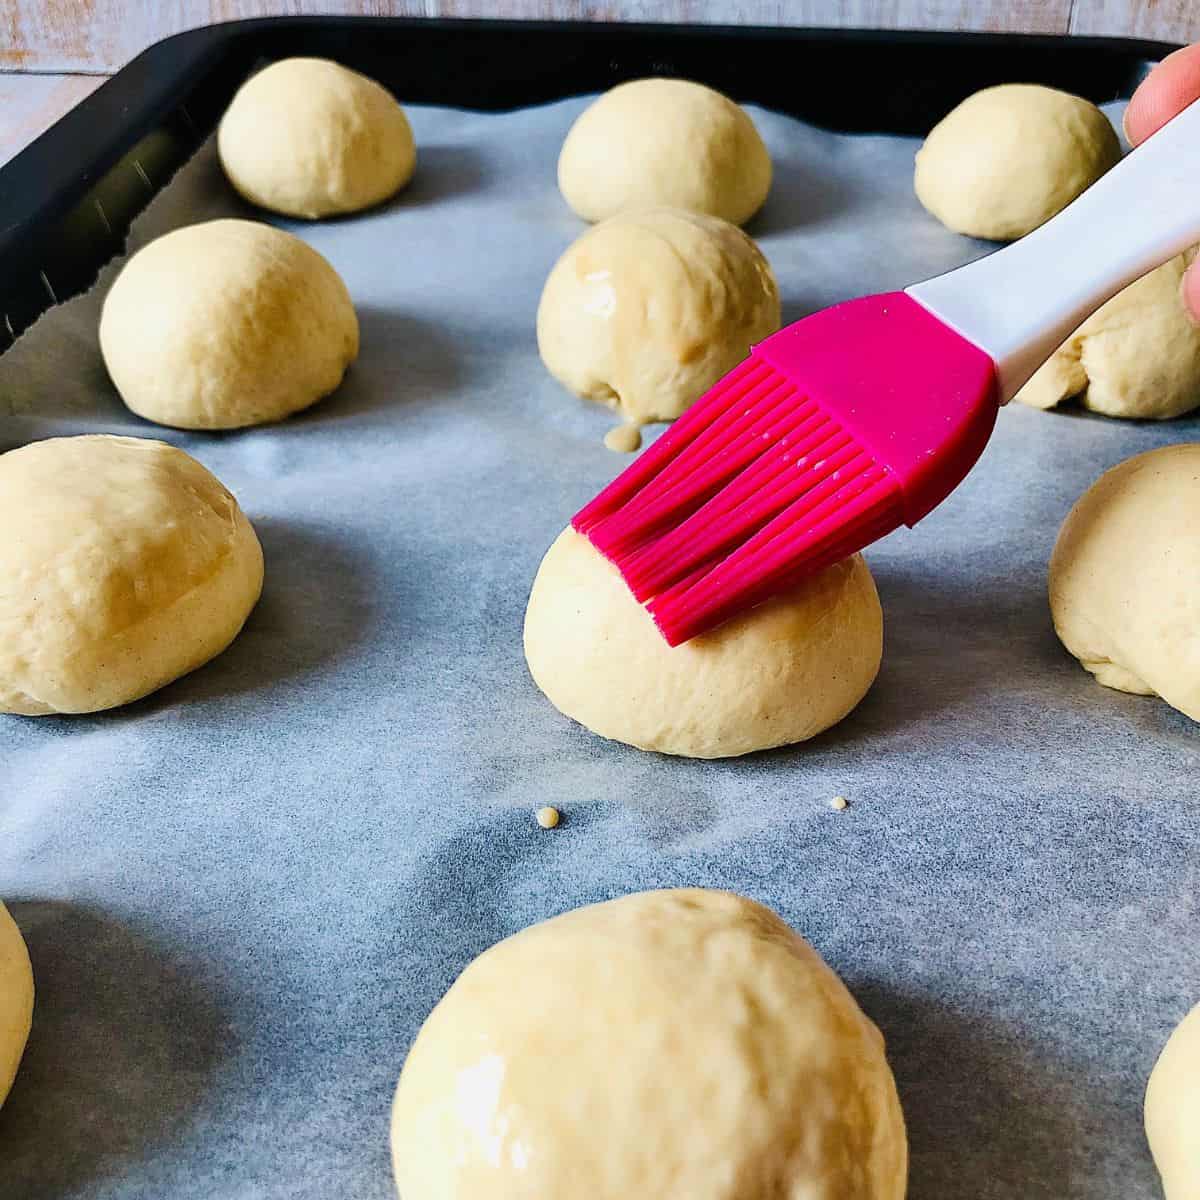 A hand Brushing mini brioche bun dough balls with plant-based milk/soy sauce.